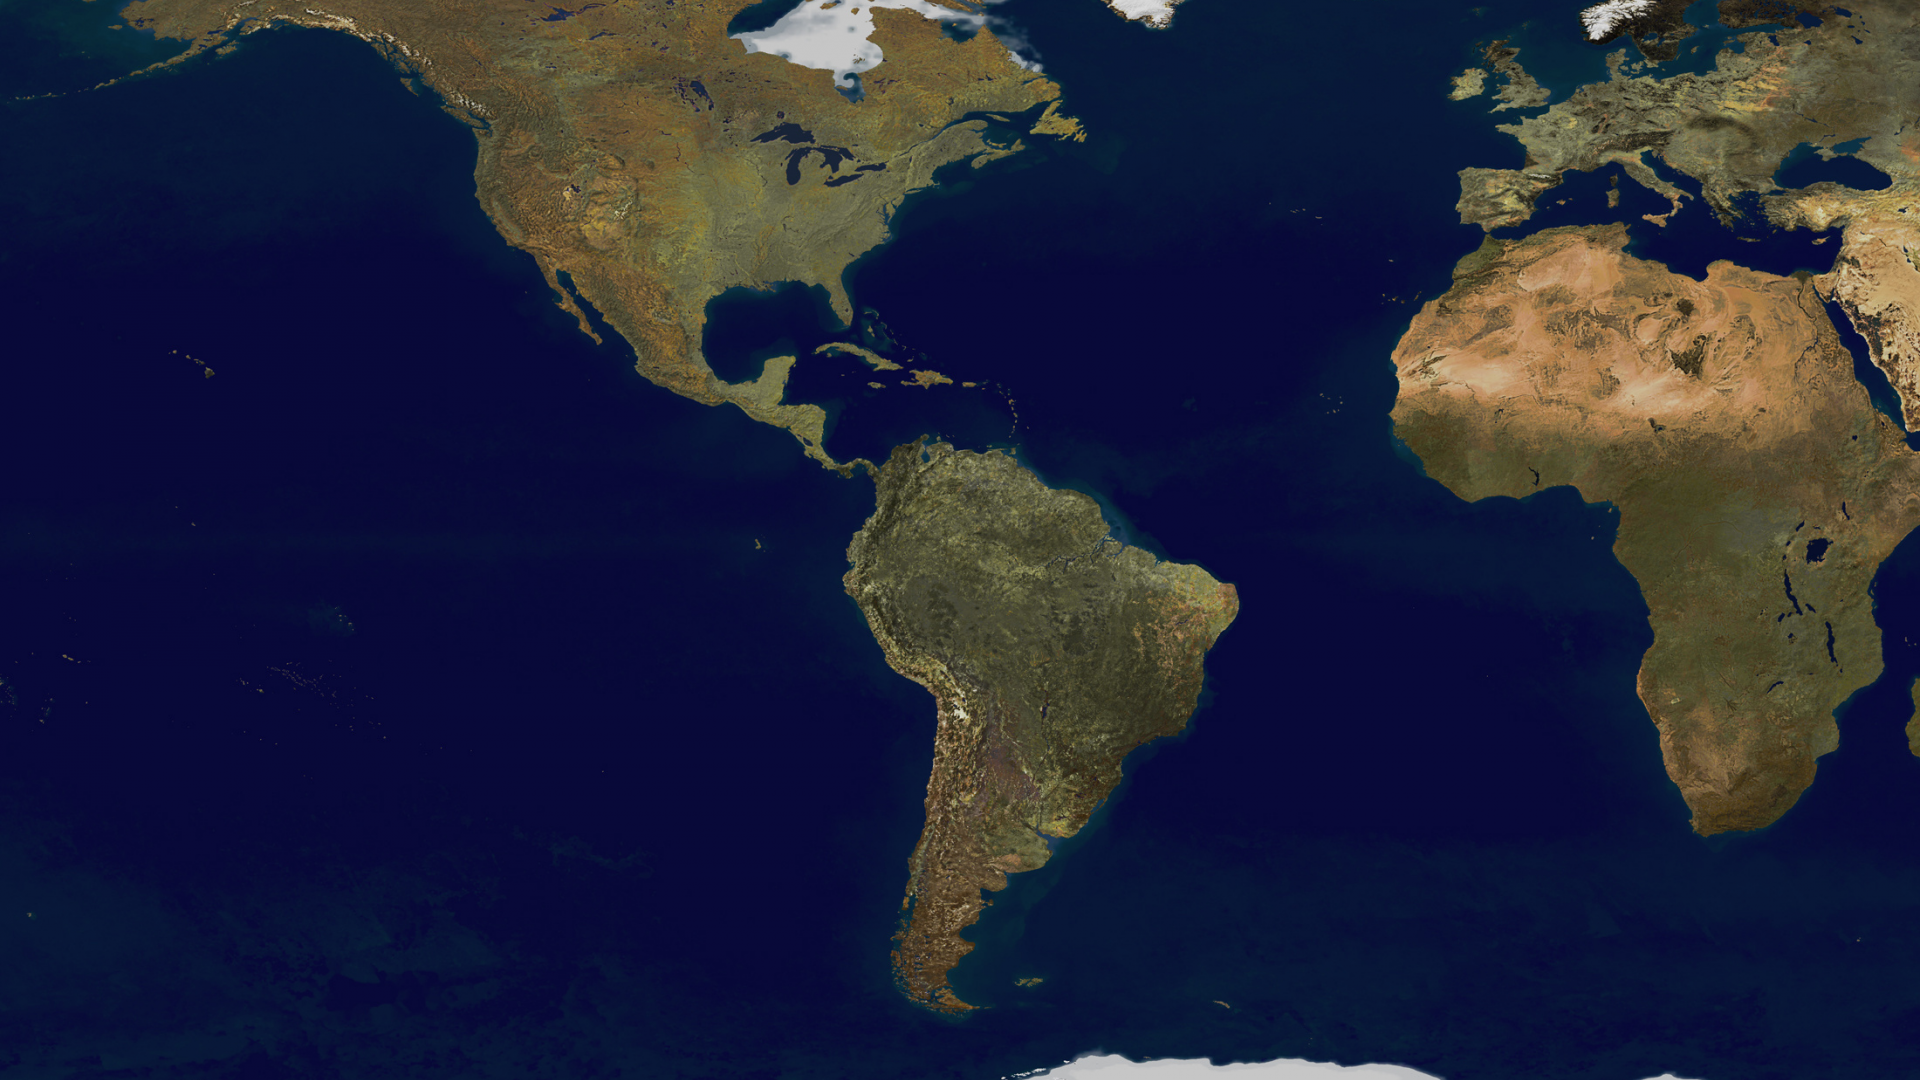 Островами похожими на материки. Индийский океан с космоса. Jrtfzs BP rjcvjcf. Материки земли. Вид континентов из космоса.